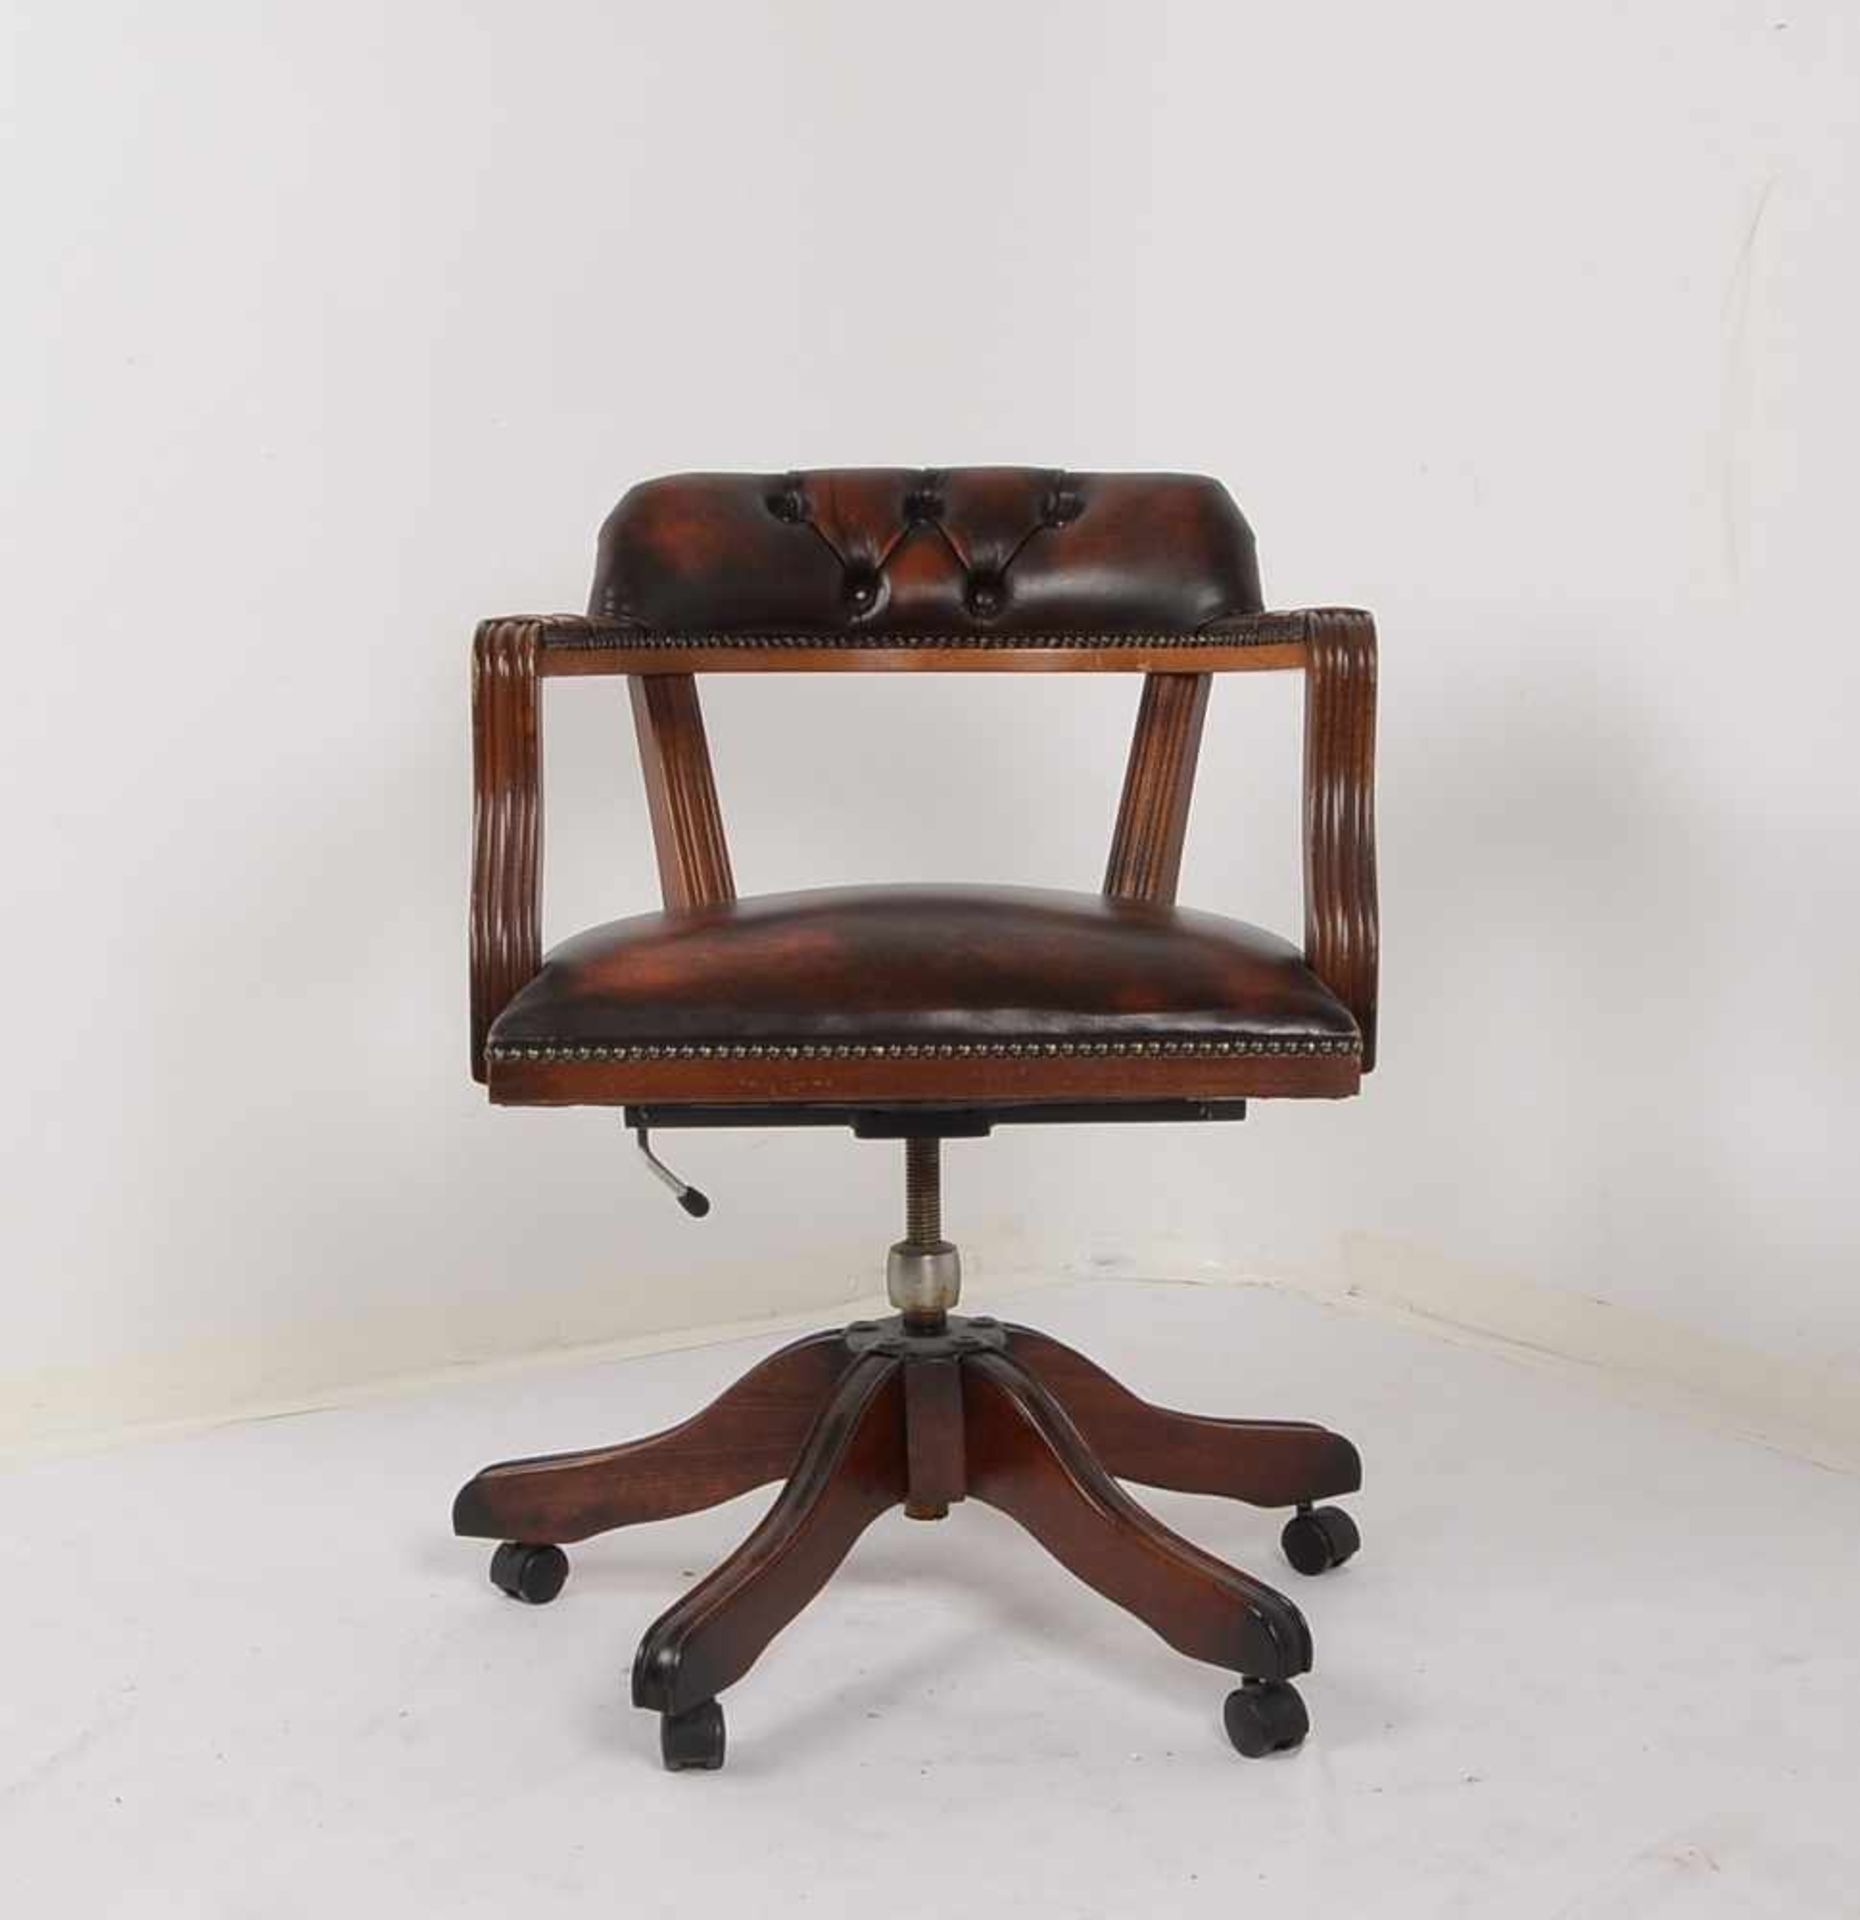 Schreibtischstuhl/'Captain's Chair', Mahagoniholz, mit Lederbezug/gepolstert, Höhen-Dreh-Verstellung